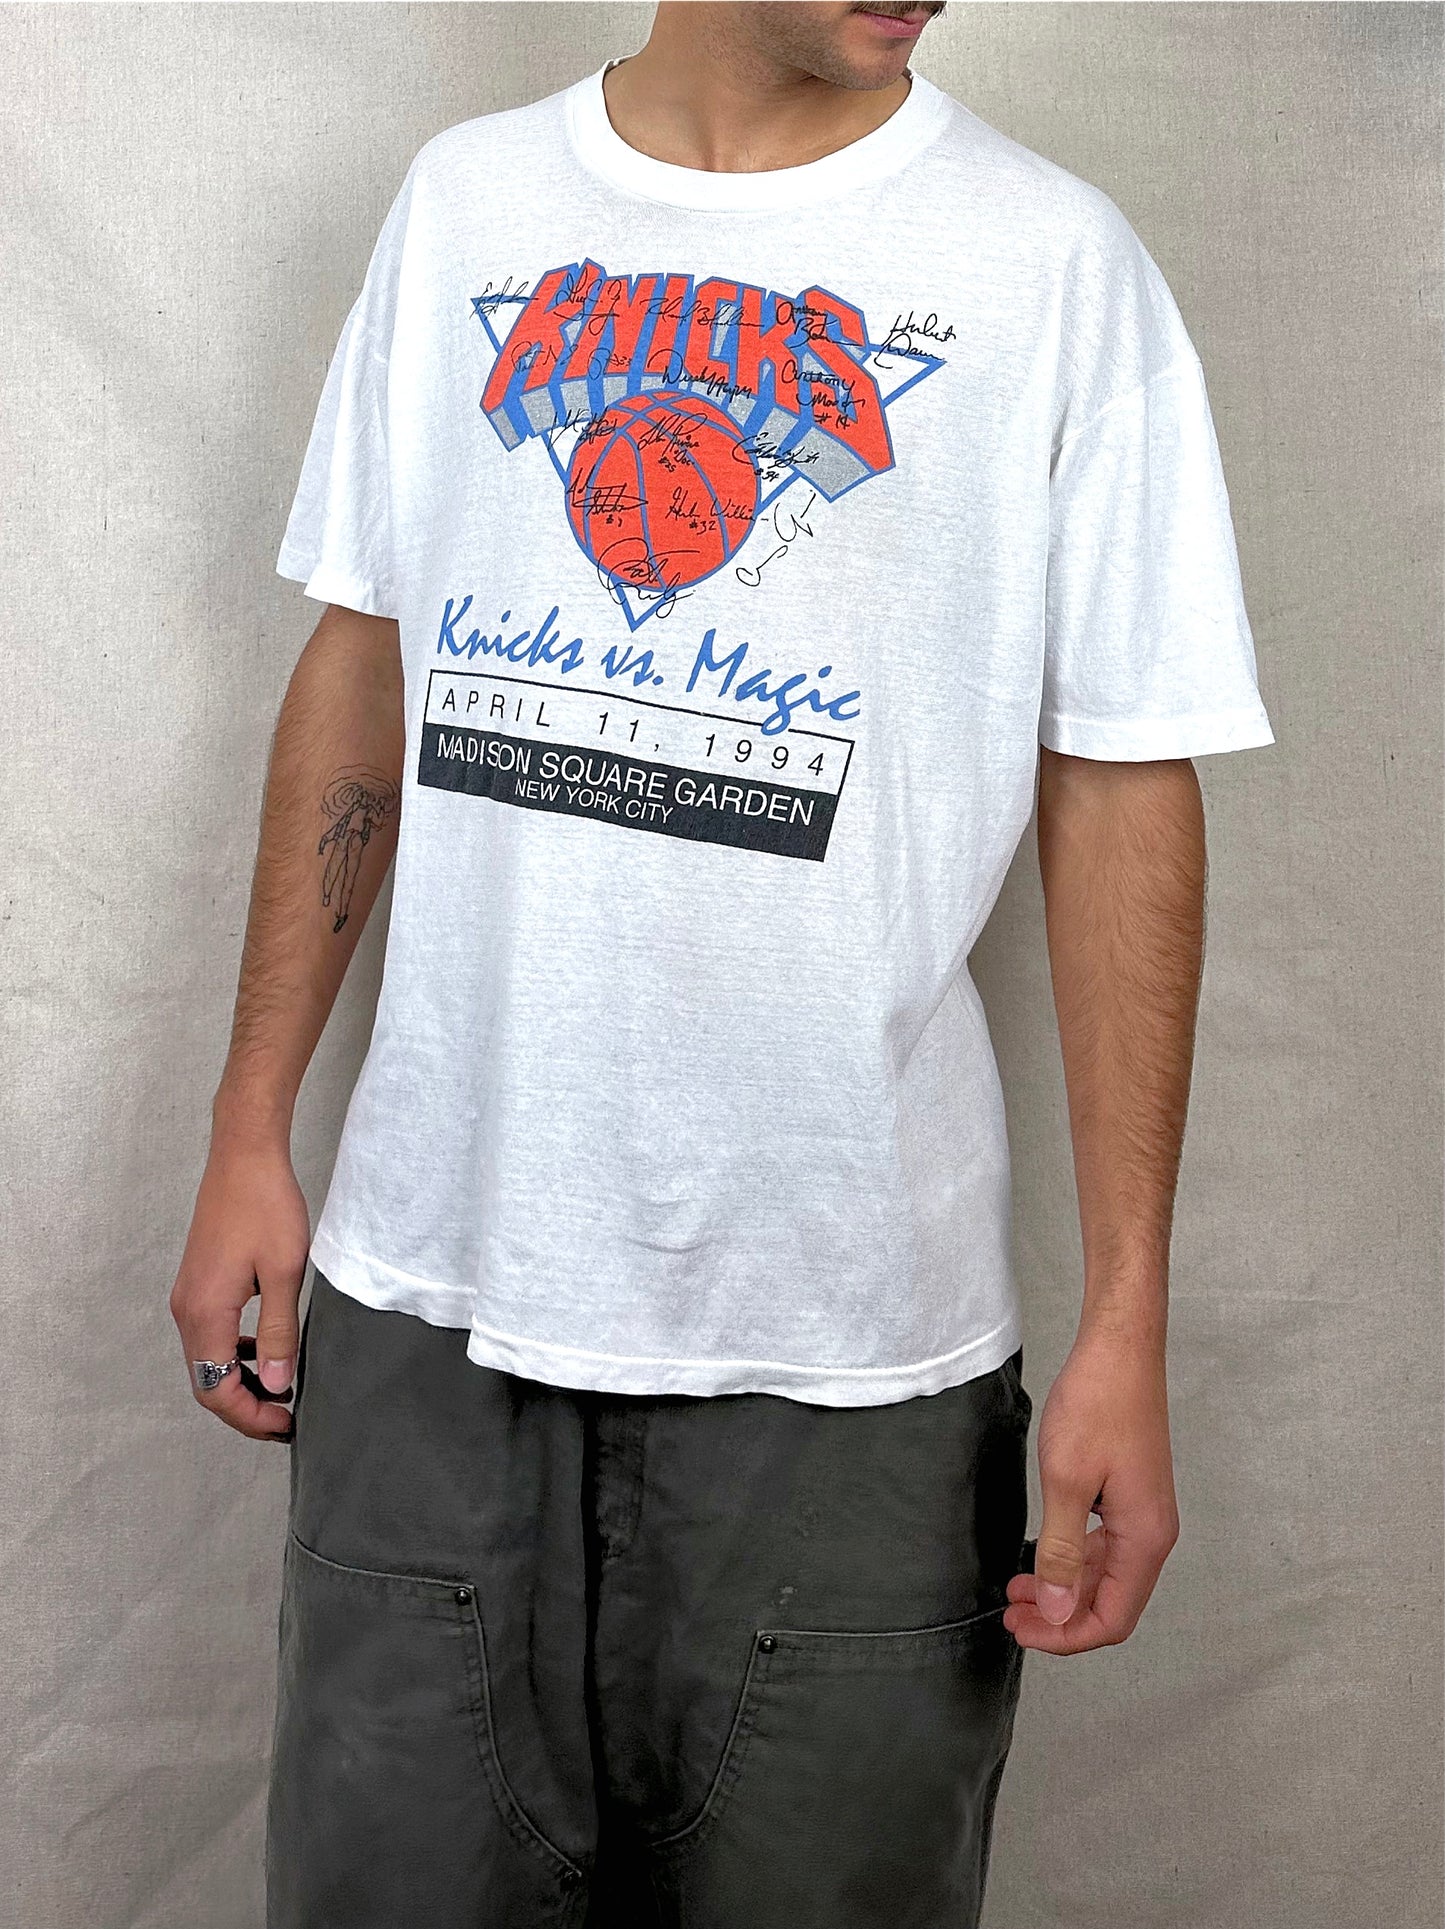 1994 New York Knicks NBA Vintage T-Shirt Size M-L